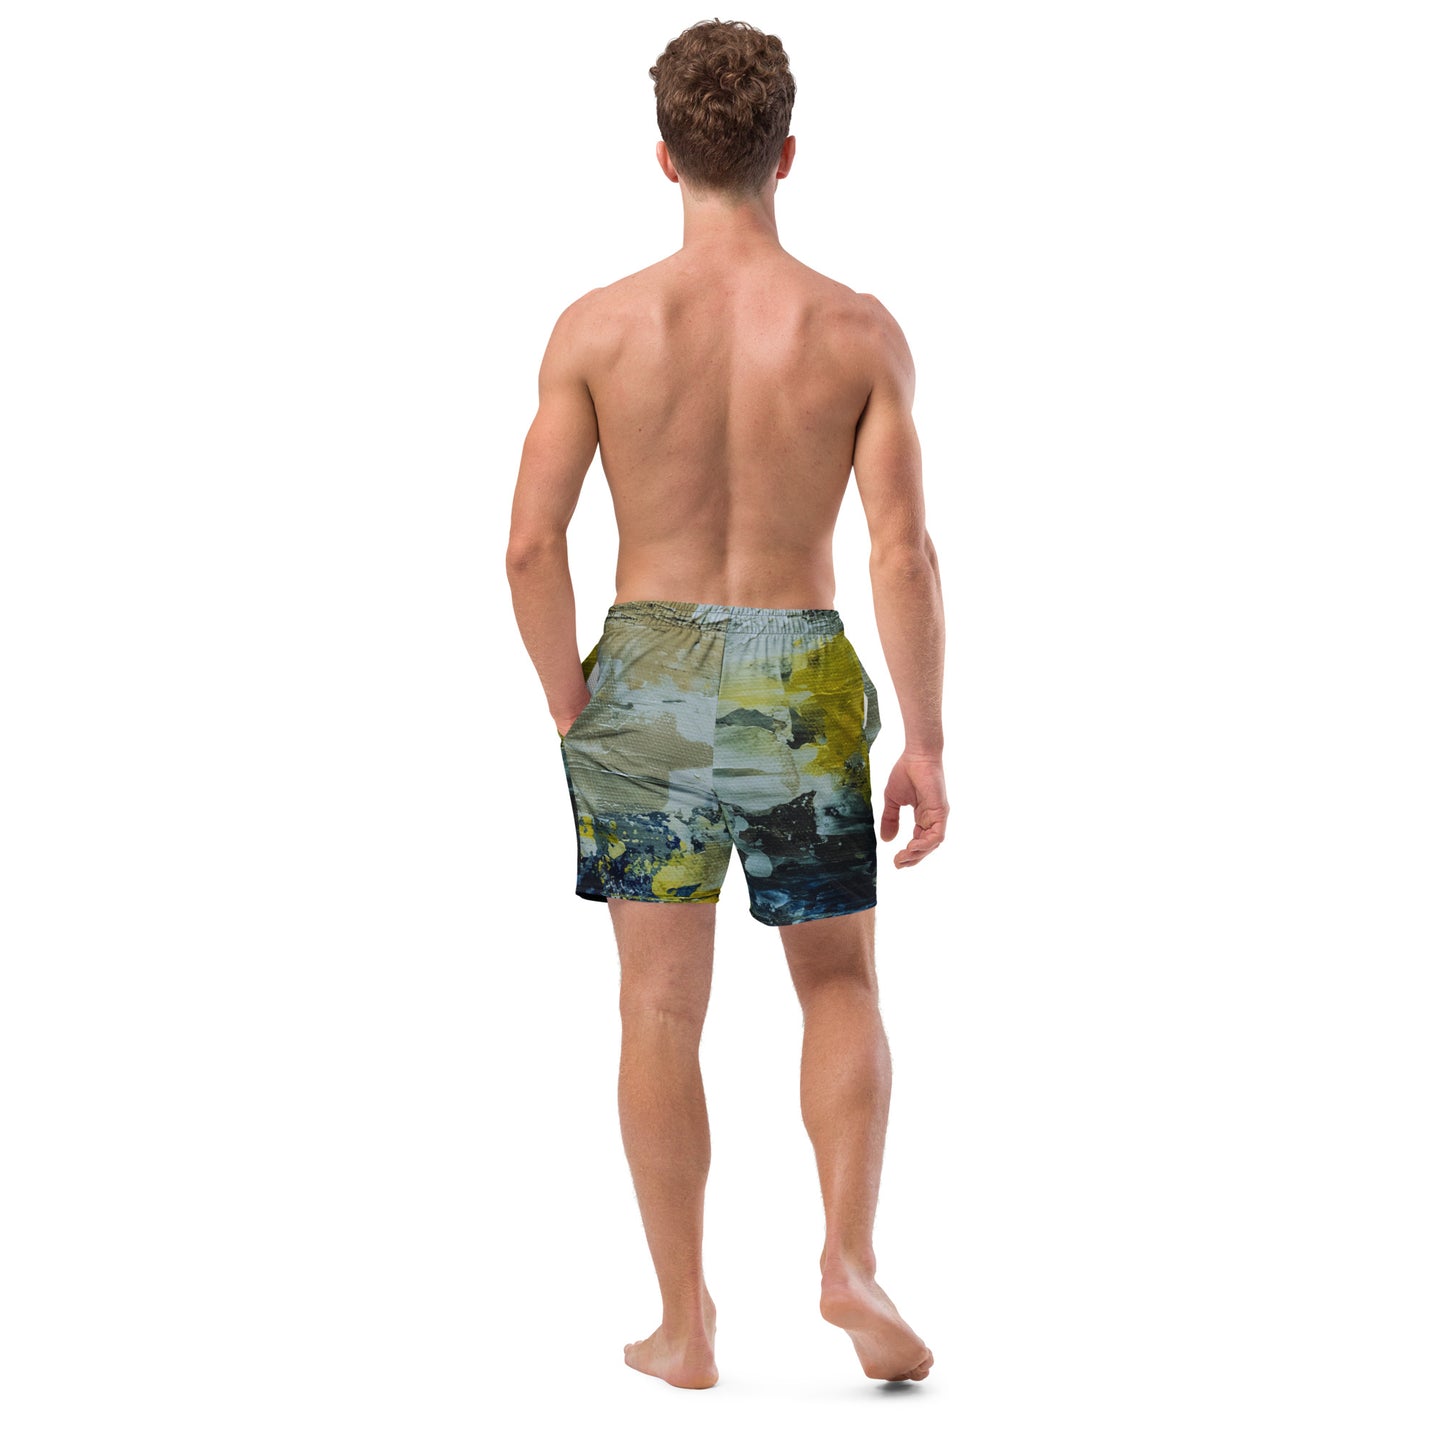 Air of the Sea Men's swim trunks